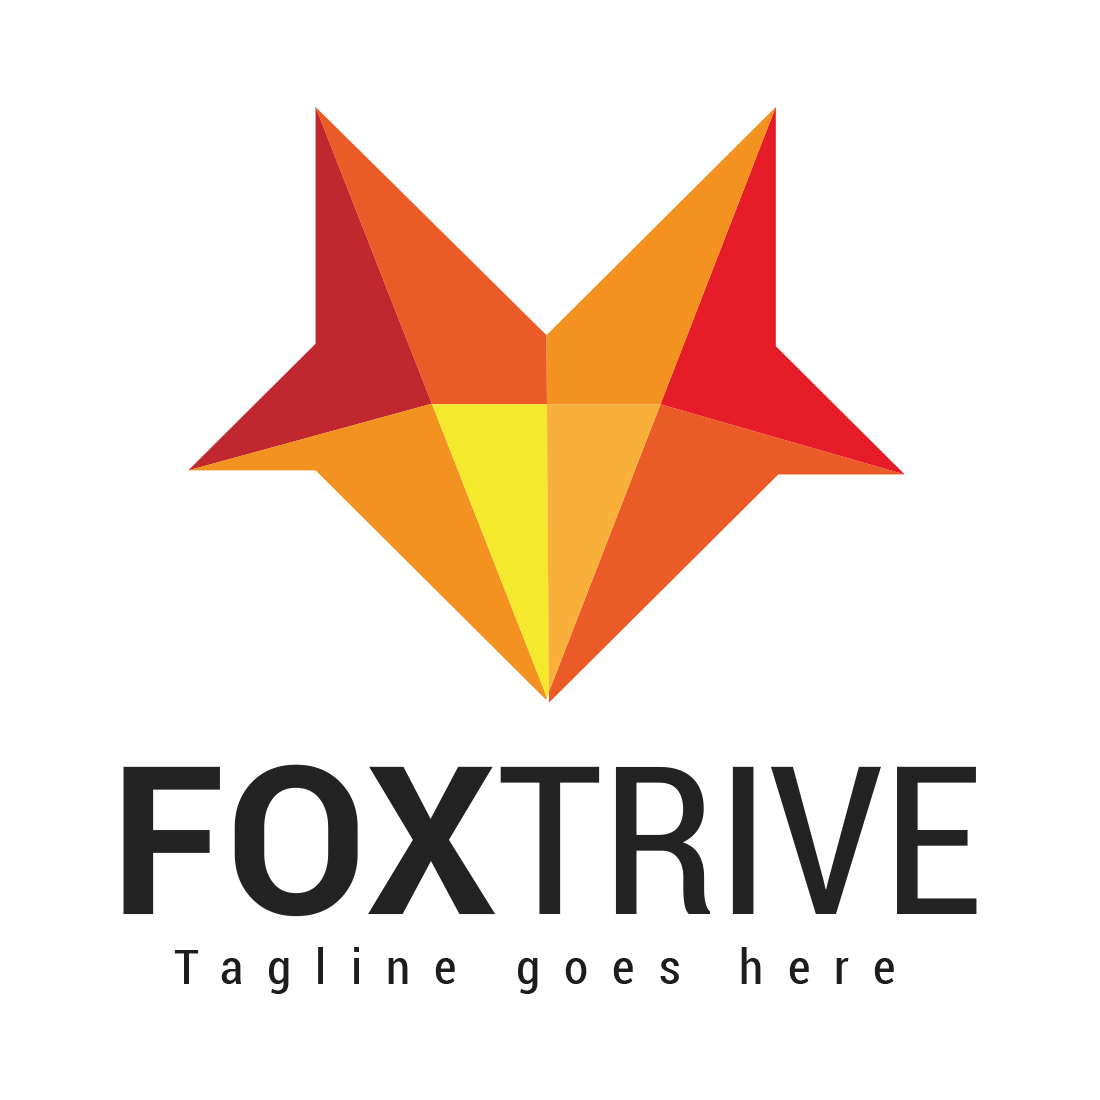 Creative Foxtrive (Fox) Geometrical logo design cover image.